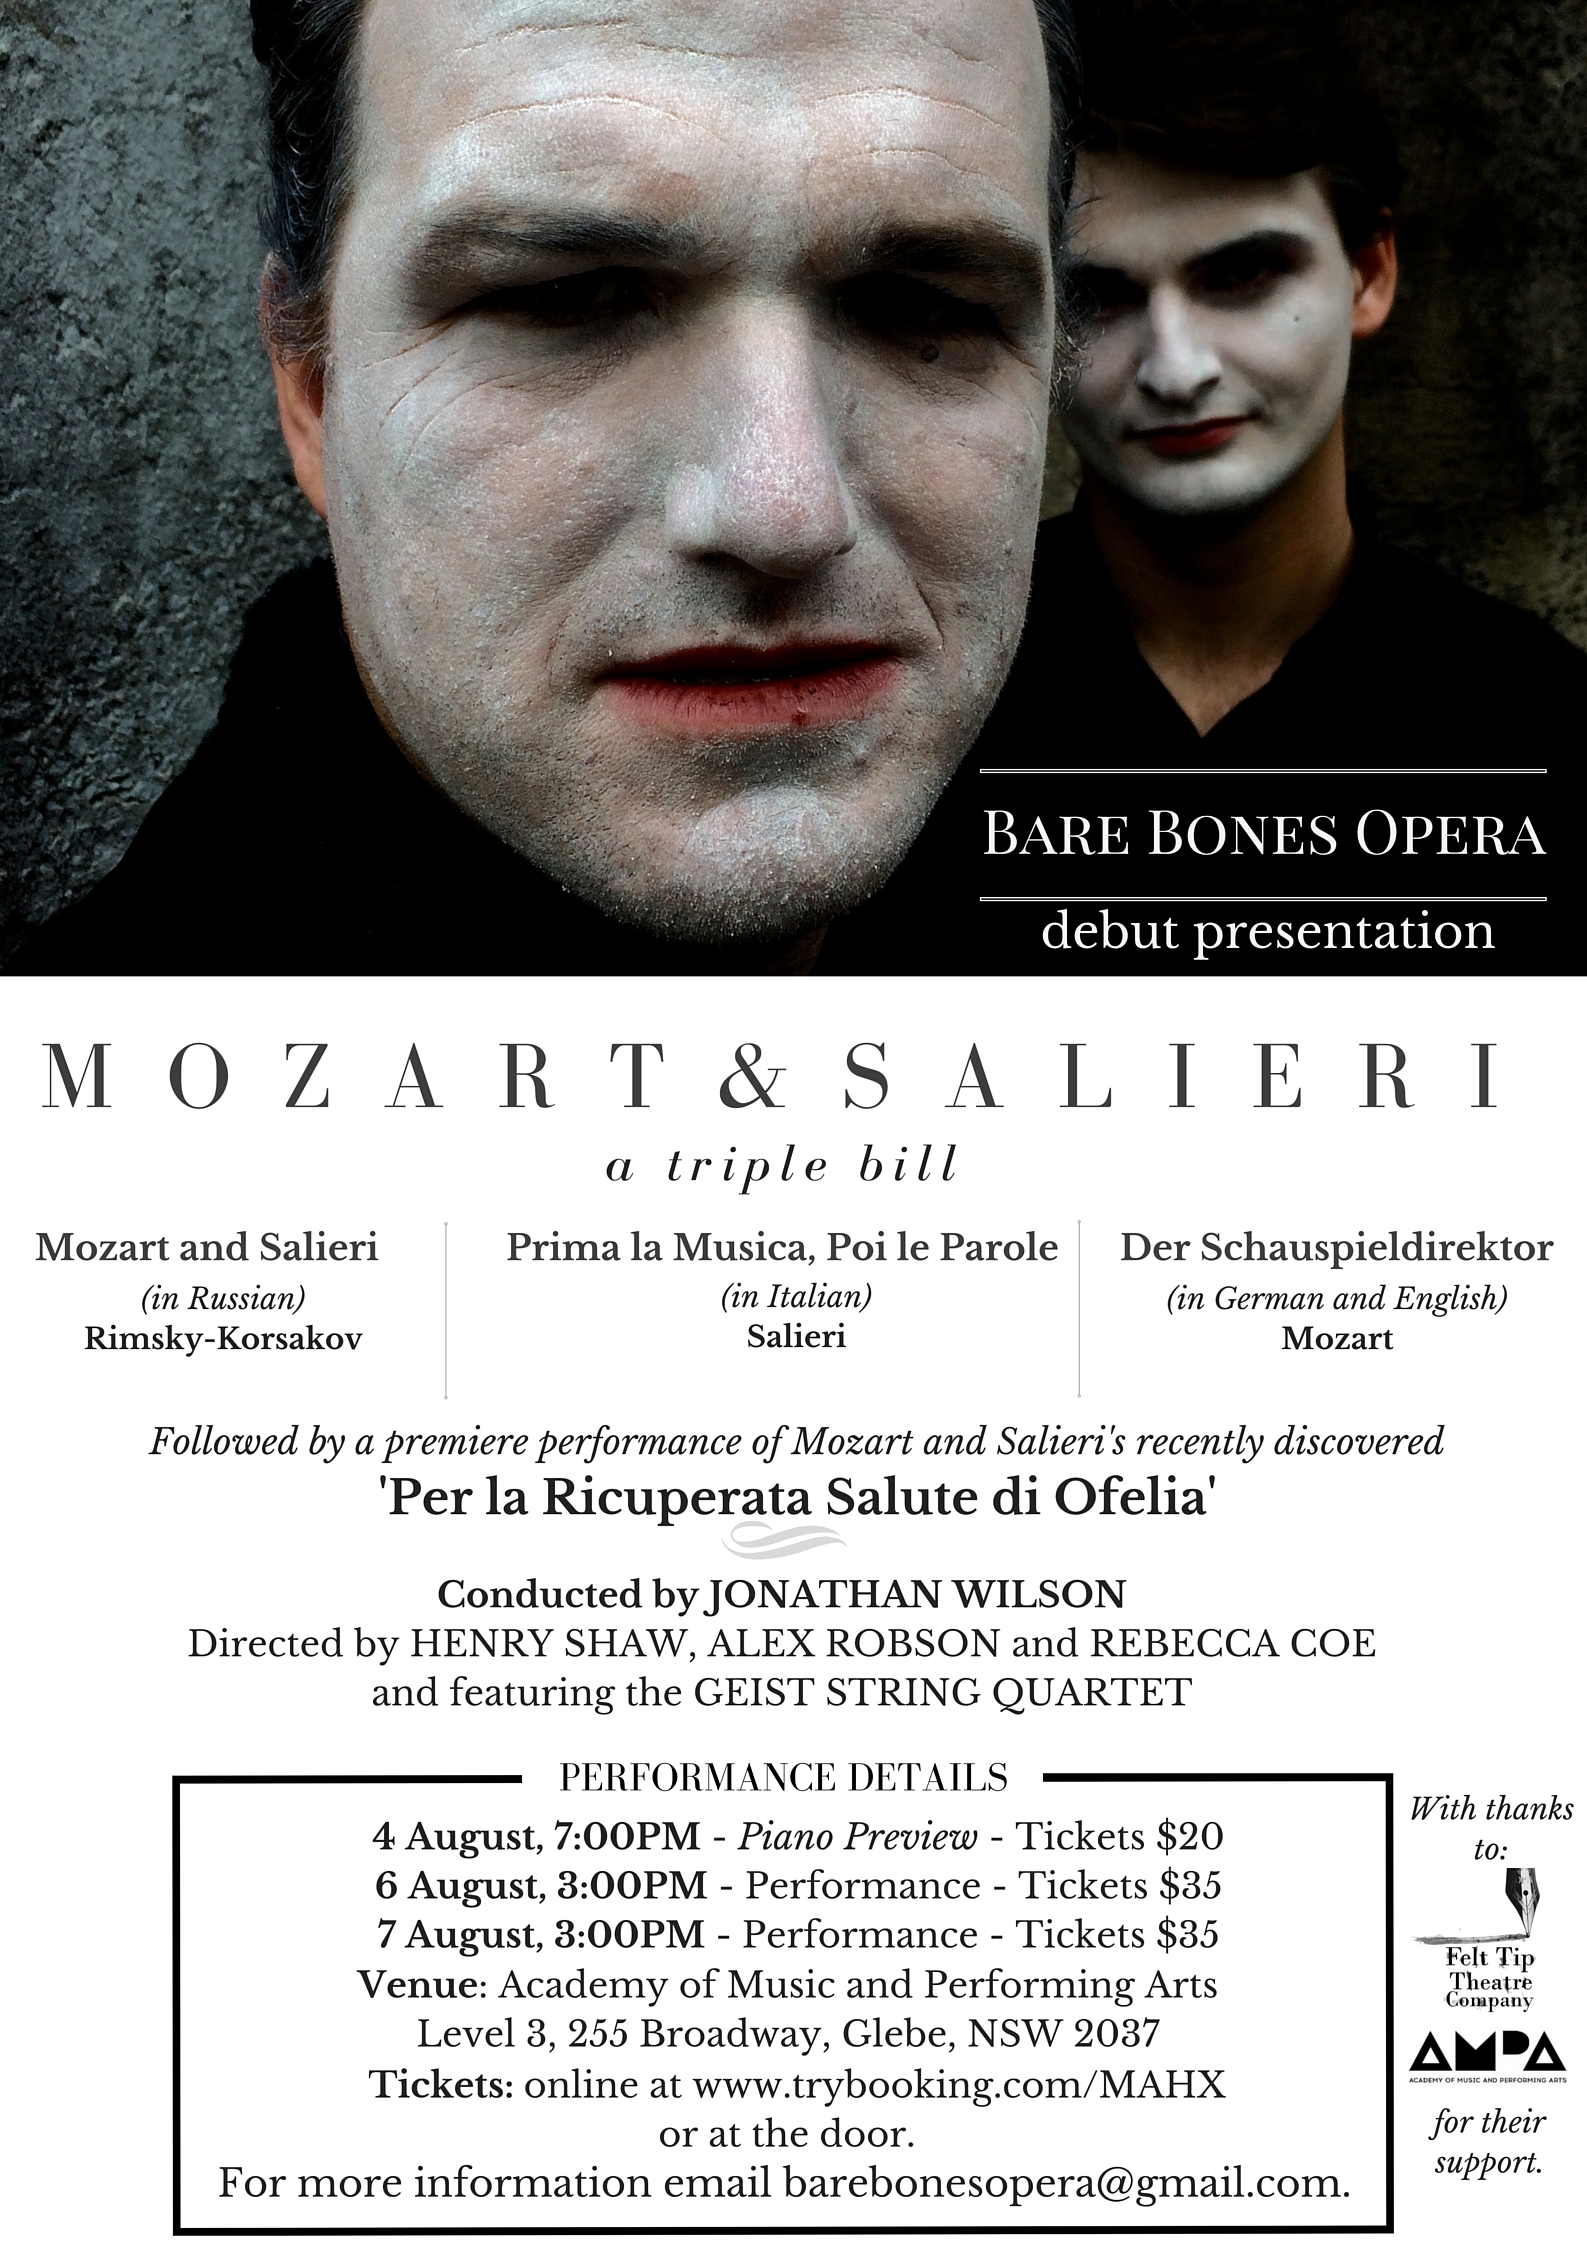 Bare Bones Opera Debuts With Mozart And Salieri